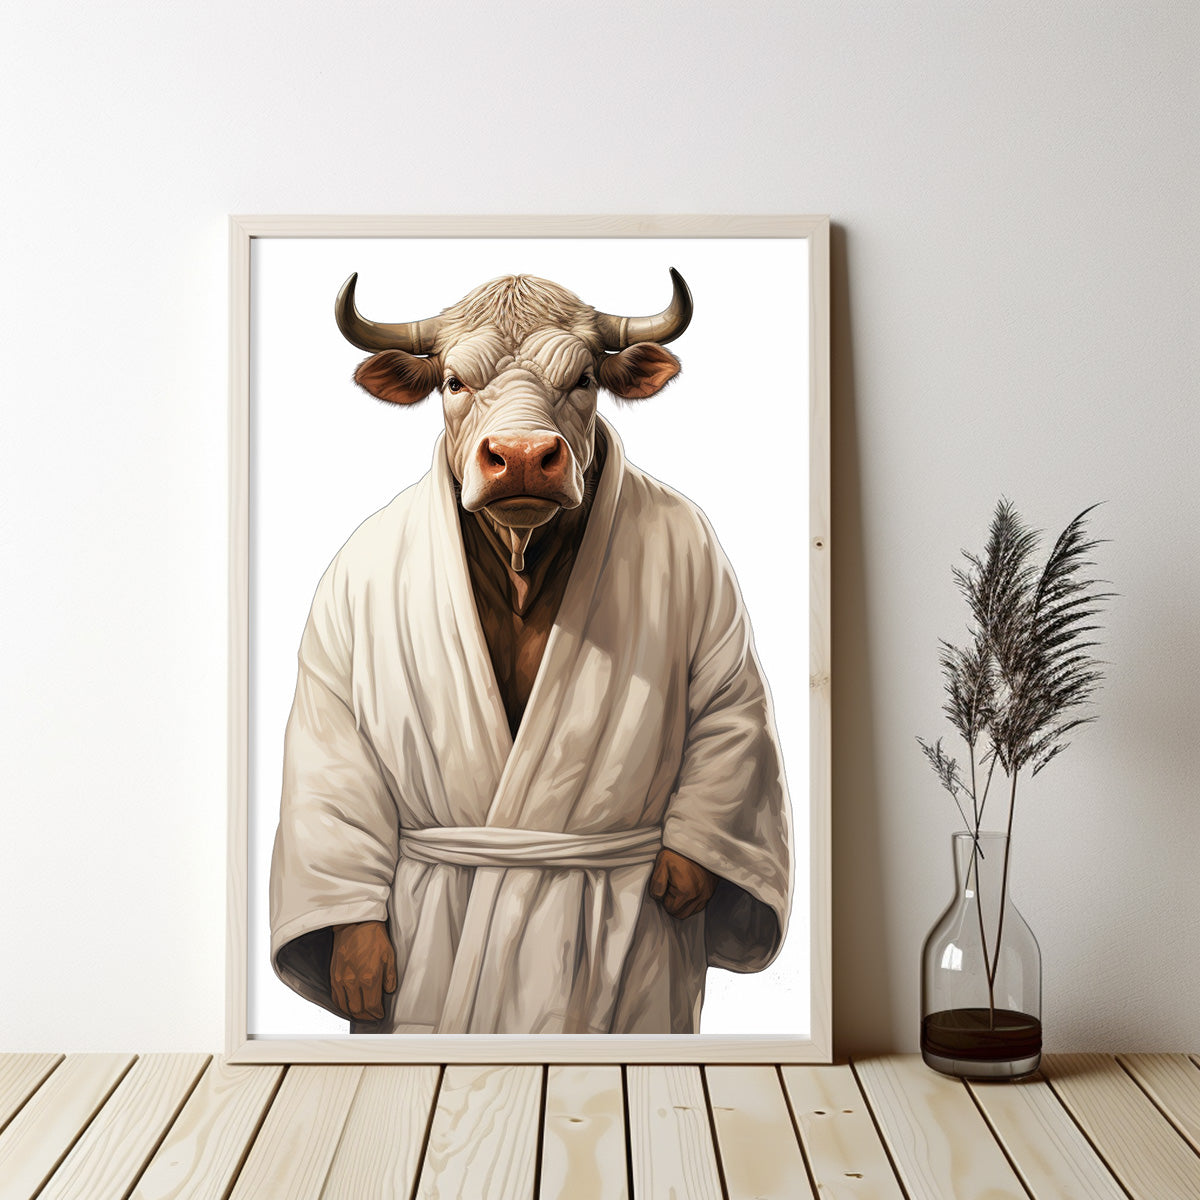 Highland Cow In Bathrobe, Cow Bathroom Decor, Minimalist Modern Farmhouse Art, Farmhouse Decor, Bathroom Wall Art, Funny Animal Print, Home Printables, Digital Download